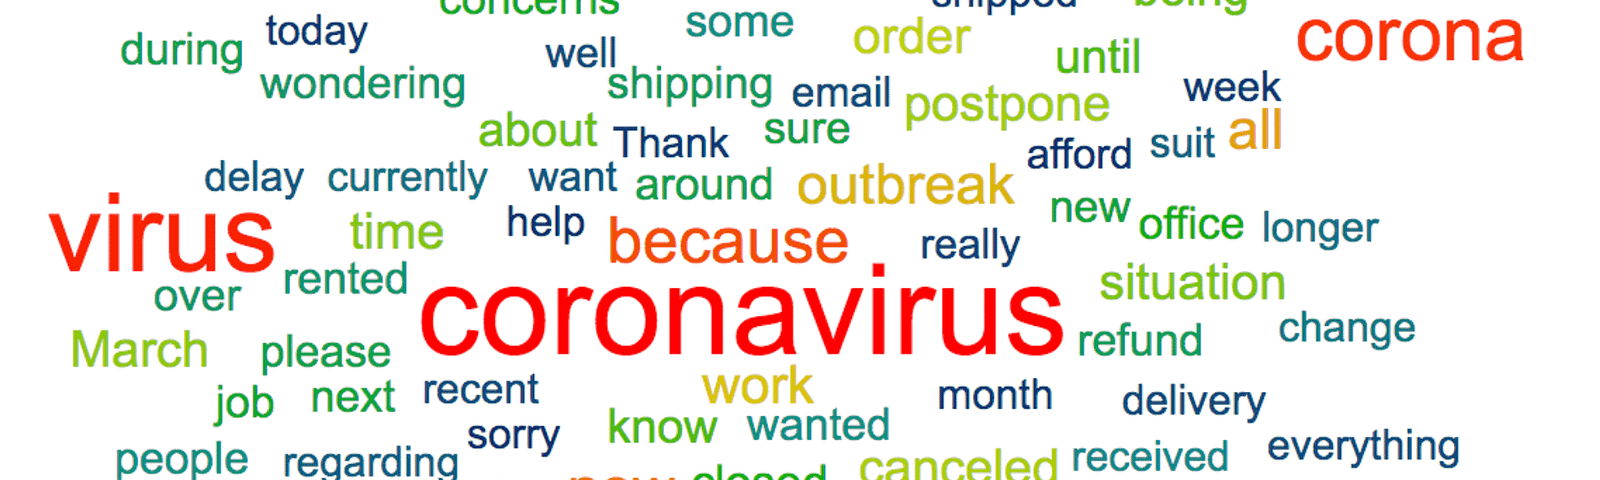 Chatdesk word cloud info graphic about coronavirus